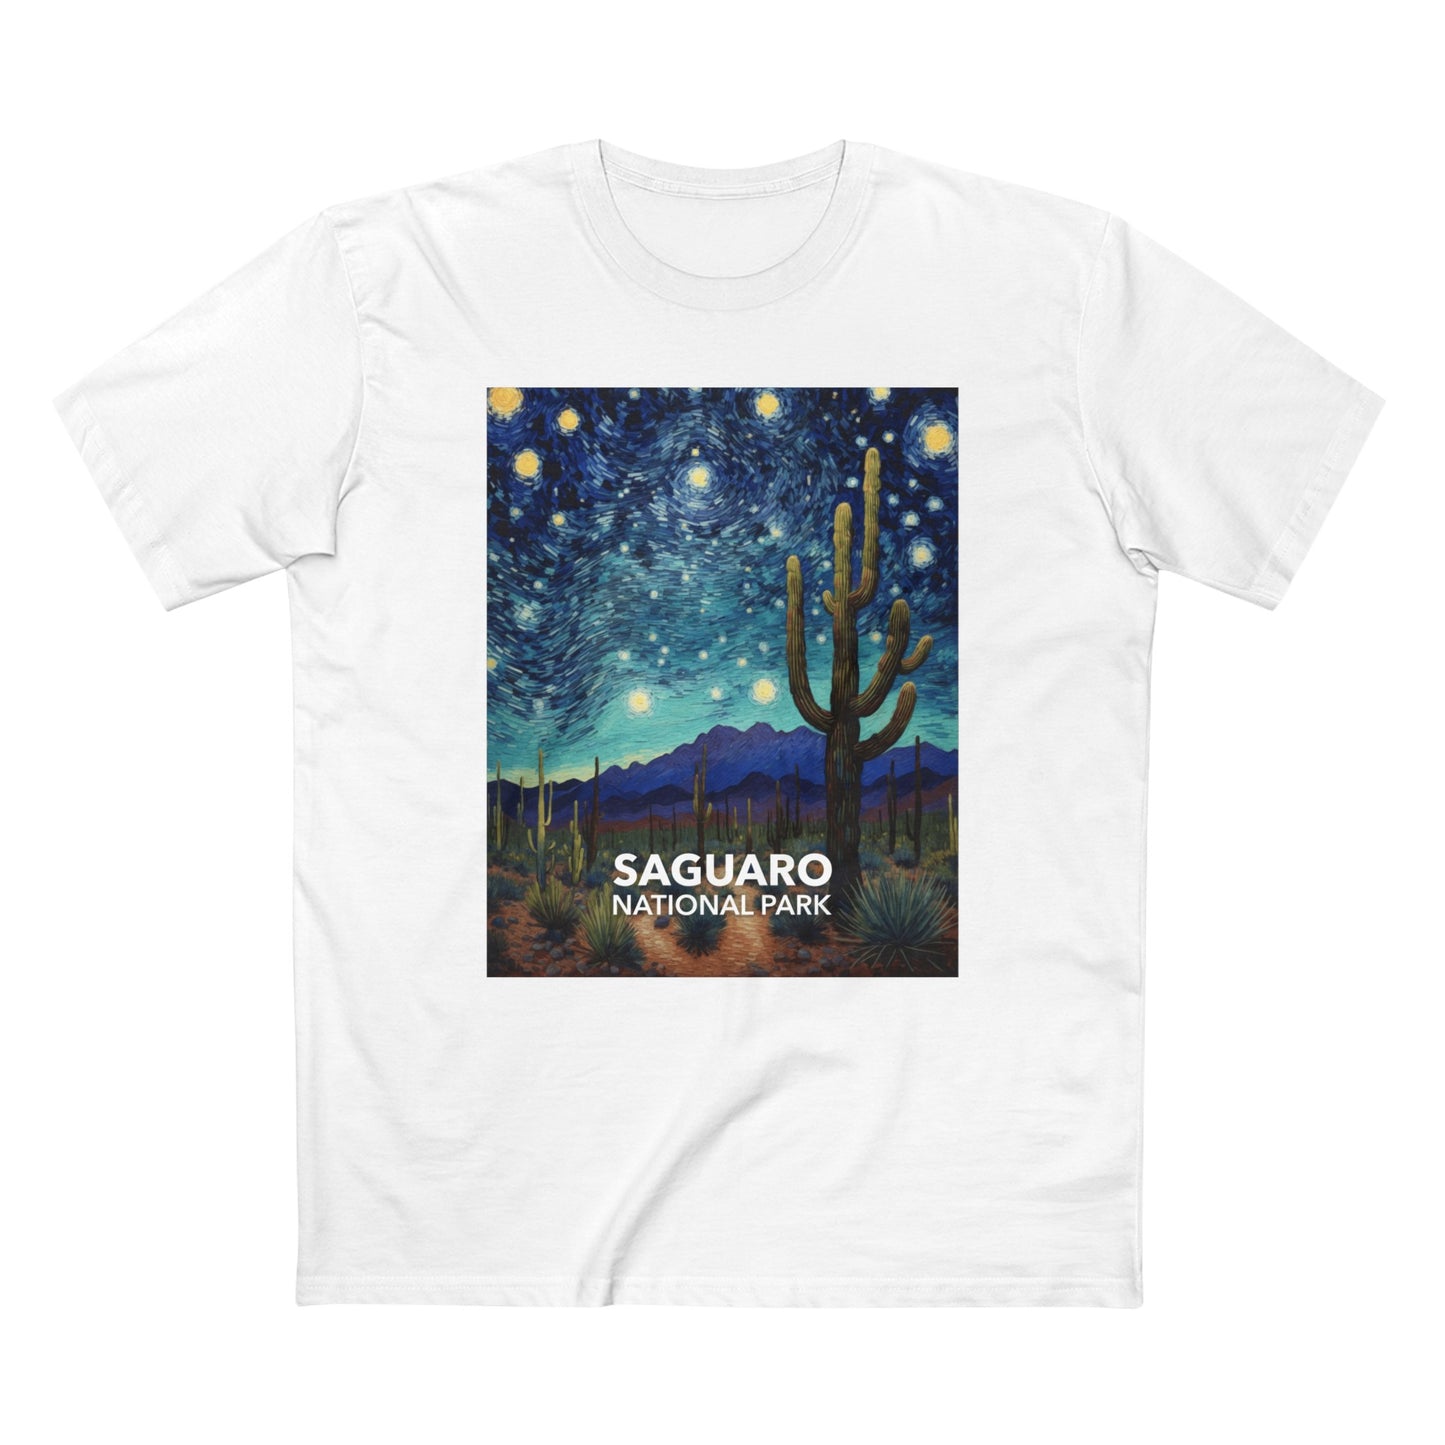 Saguaro National Park T-Shirt - The Starry Night